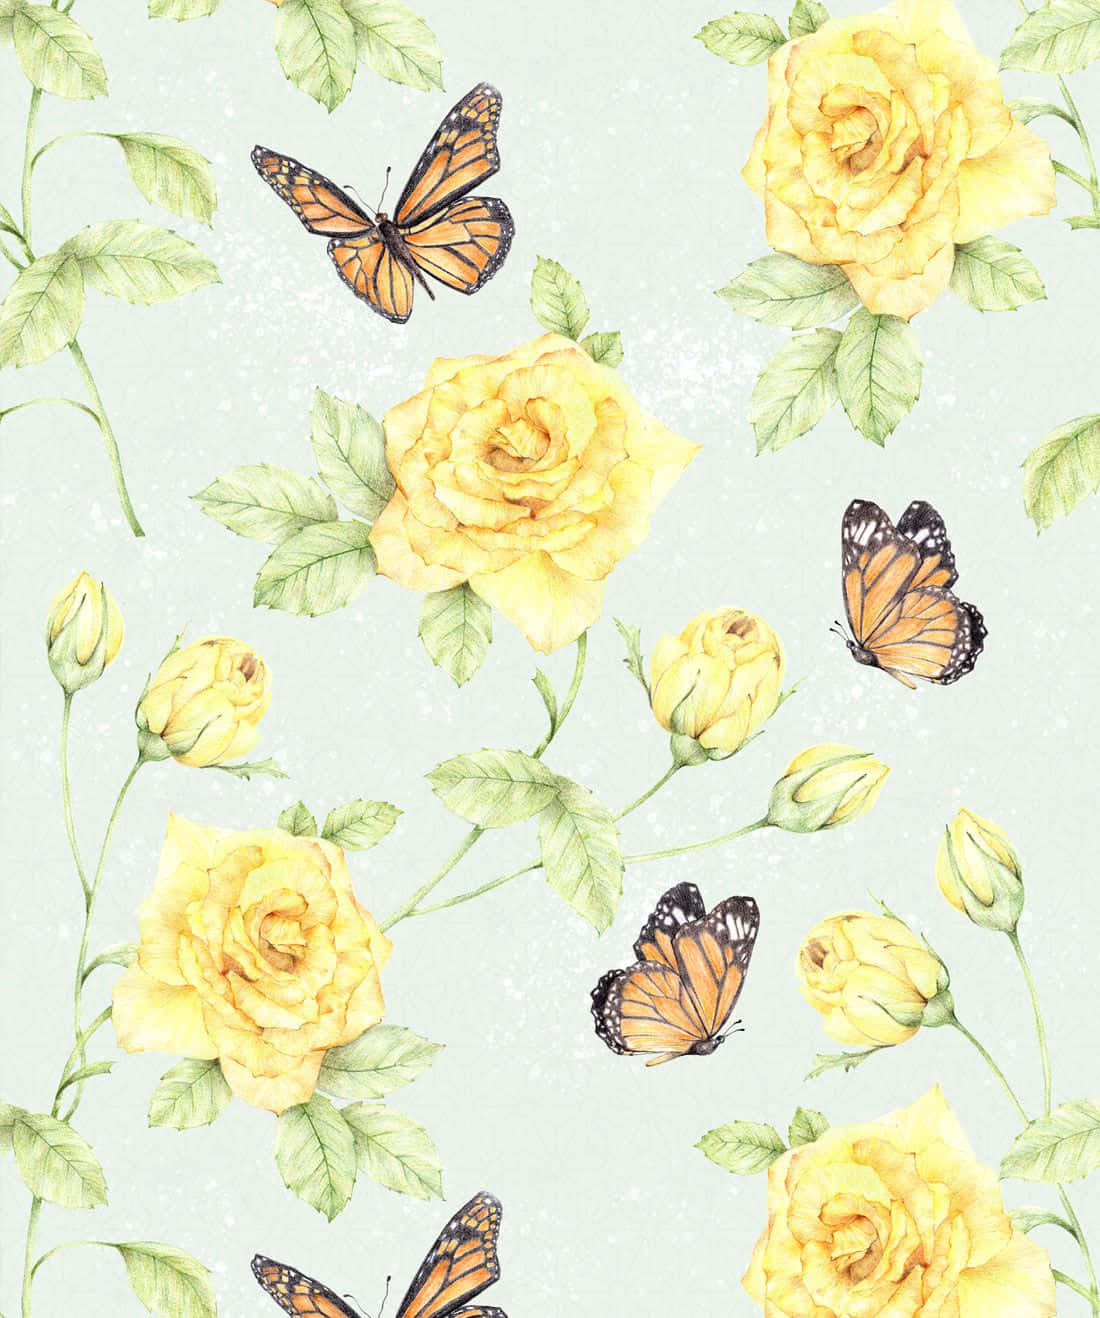 "A Monarch Butterfly resting on a flower in full bloom"